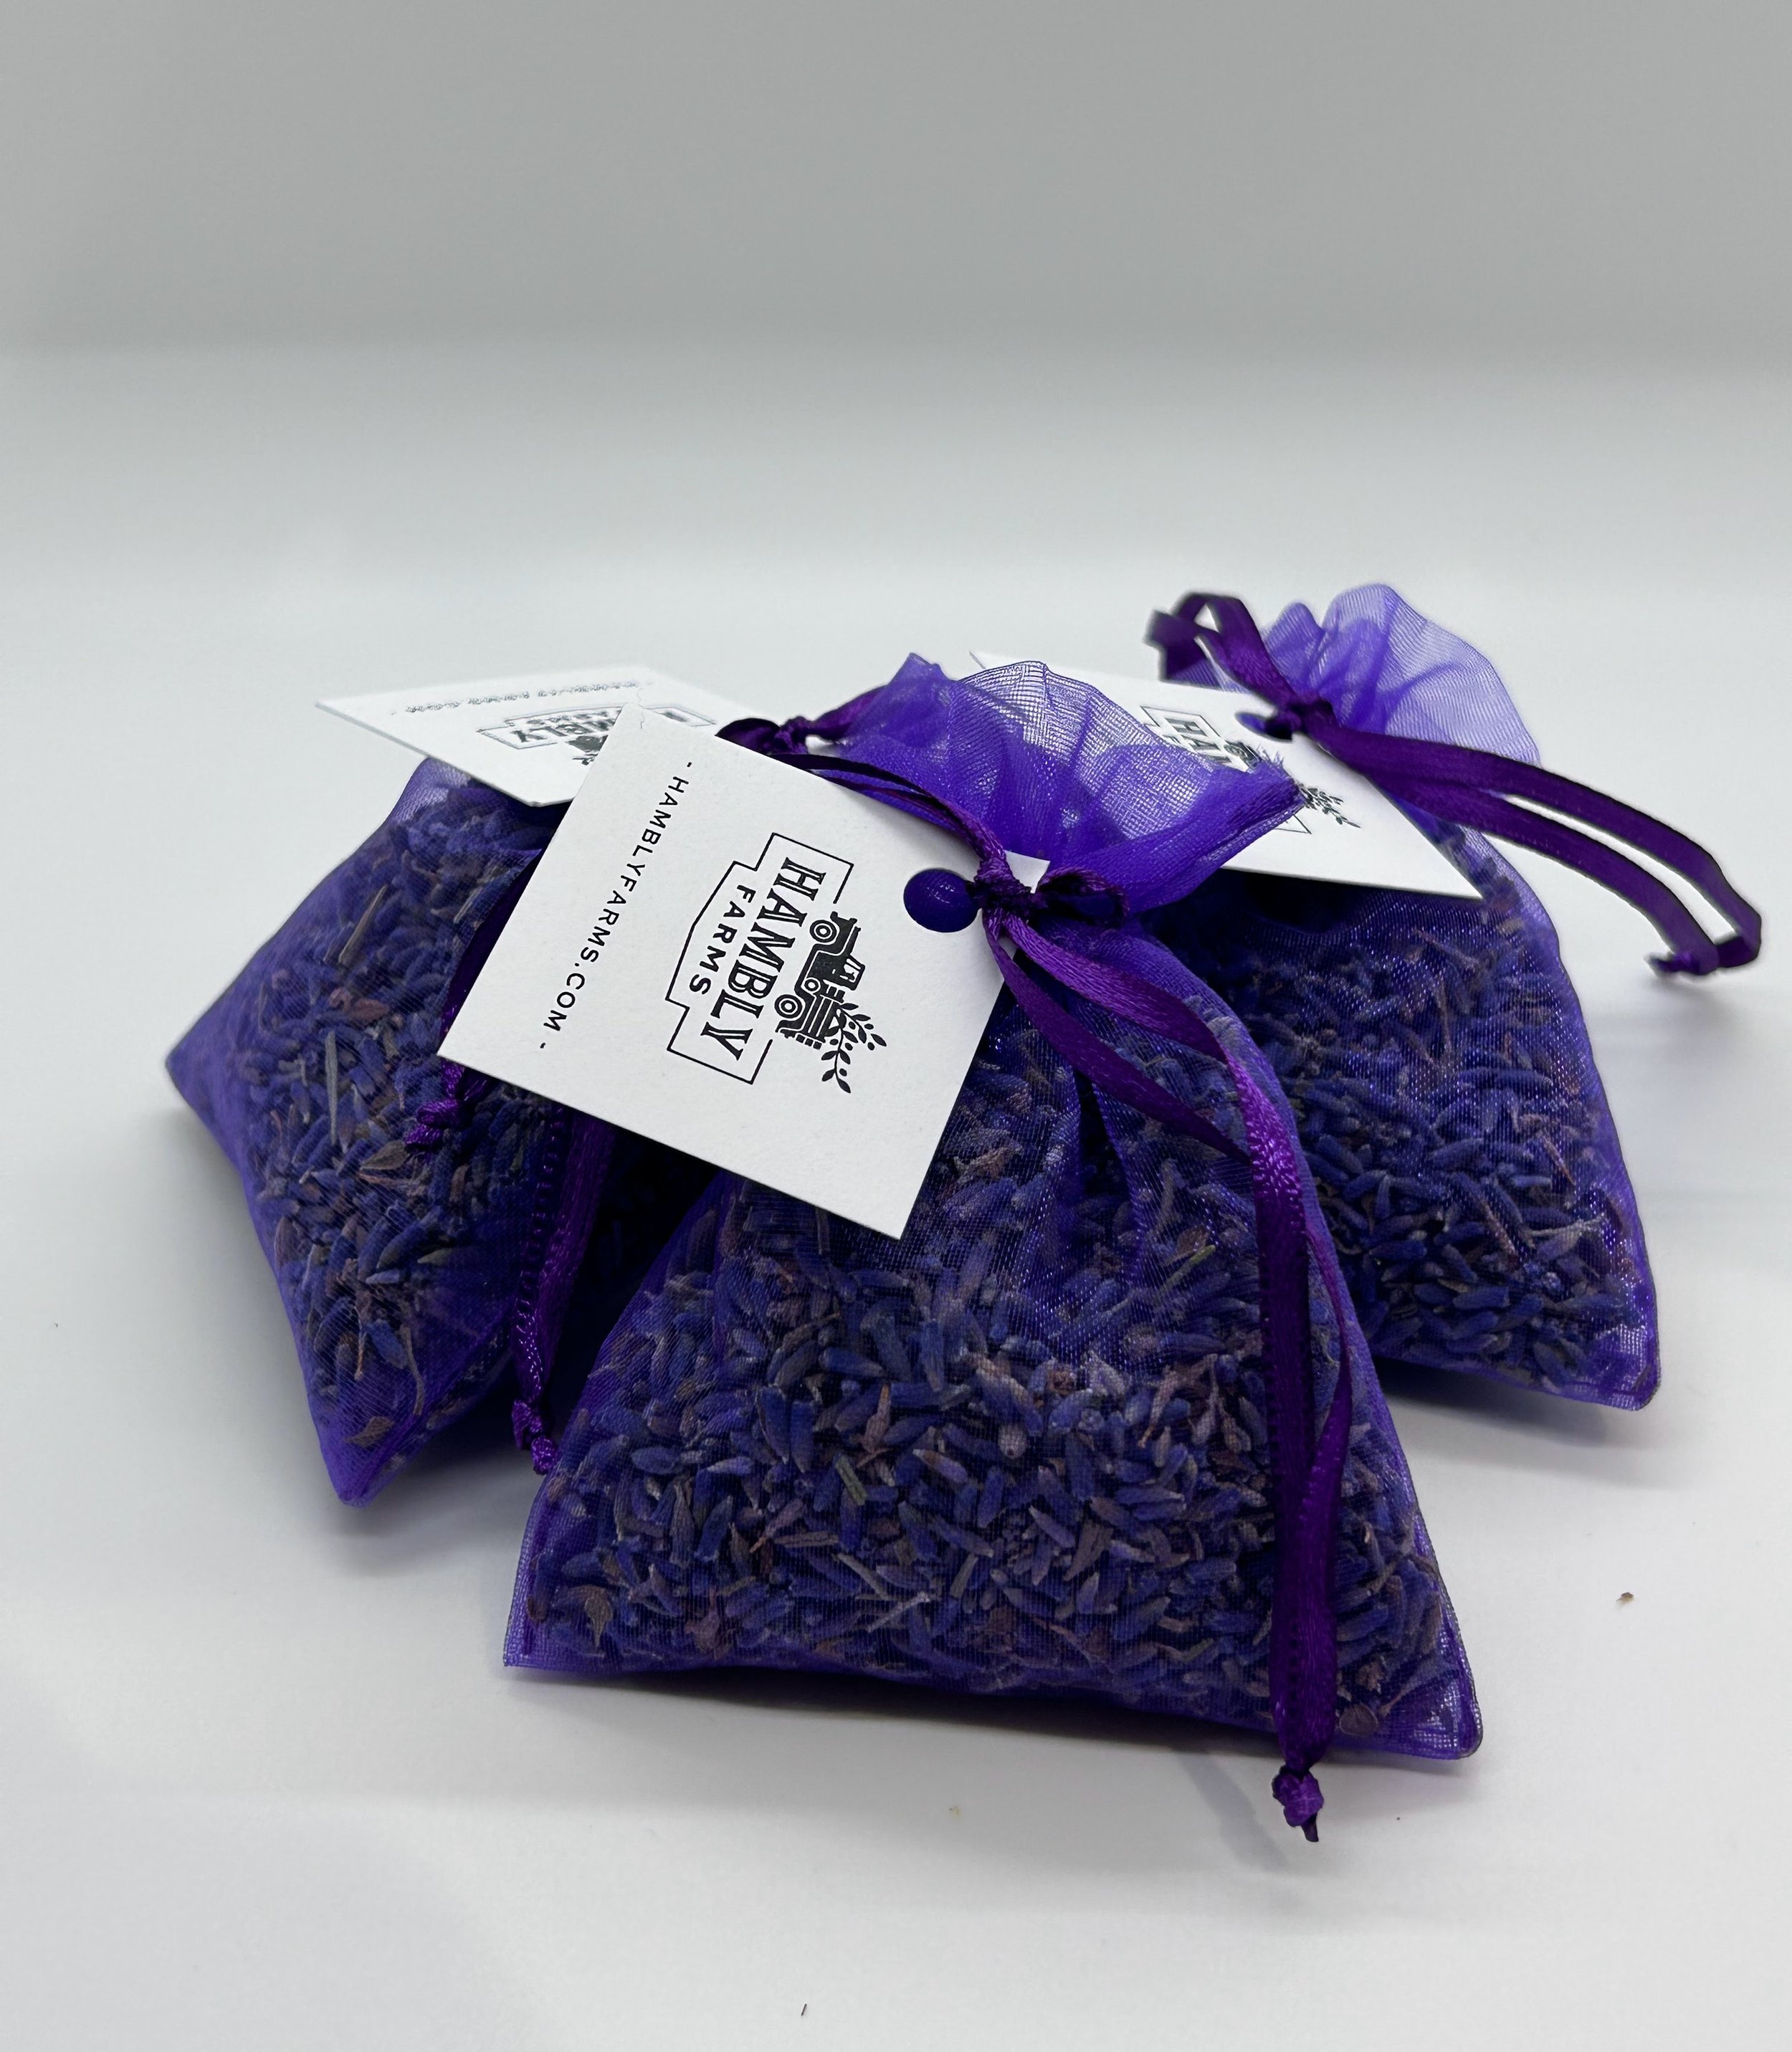 Lavender Sachet - Hambly Lavender Farm